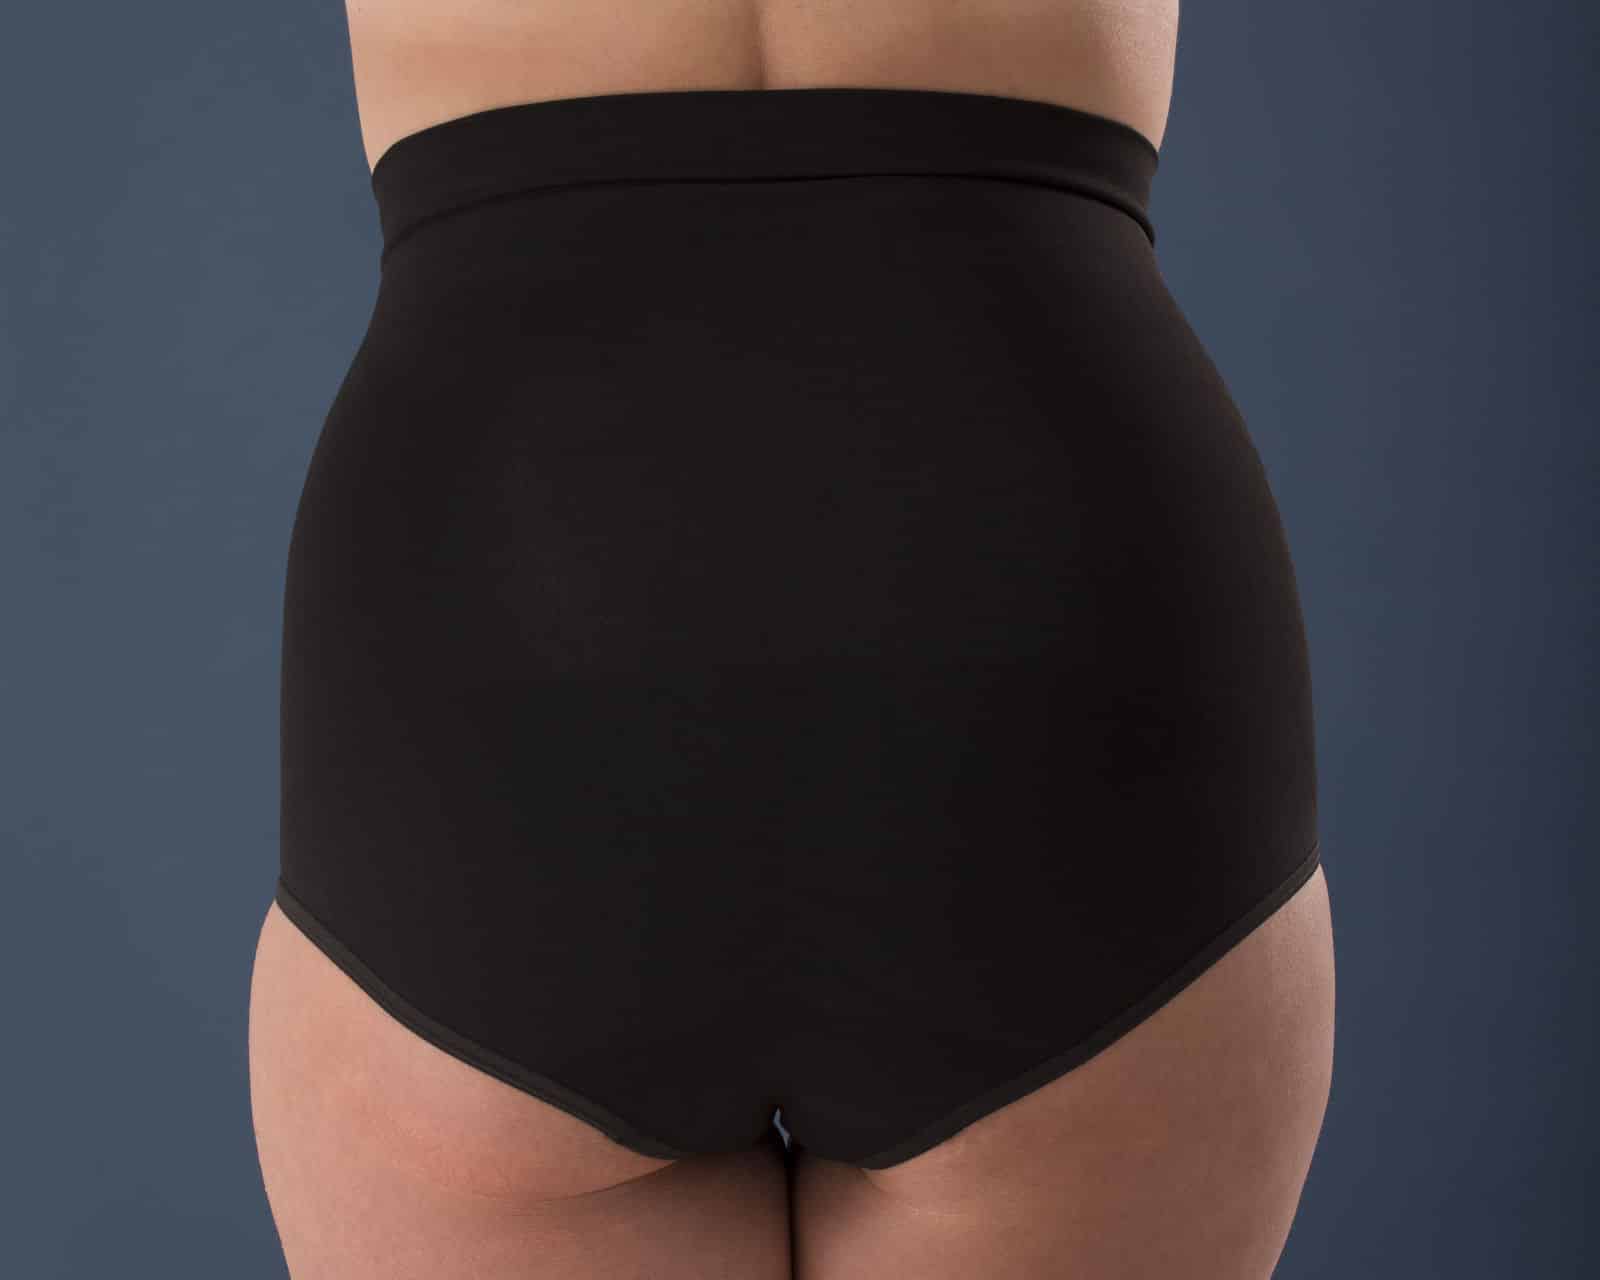 Corsinel Maximum Support Underwear Male, High Waisted, Brief. –